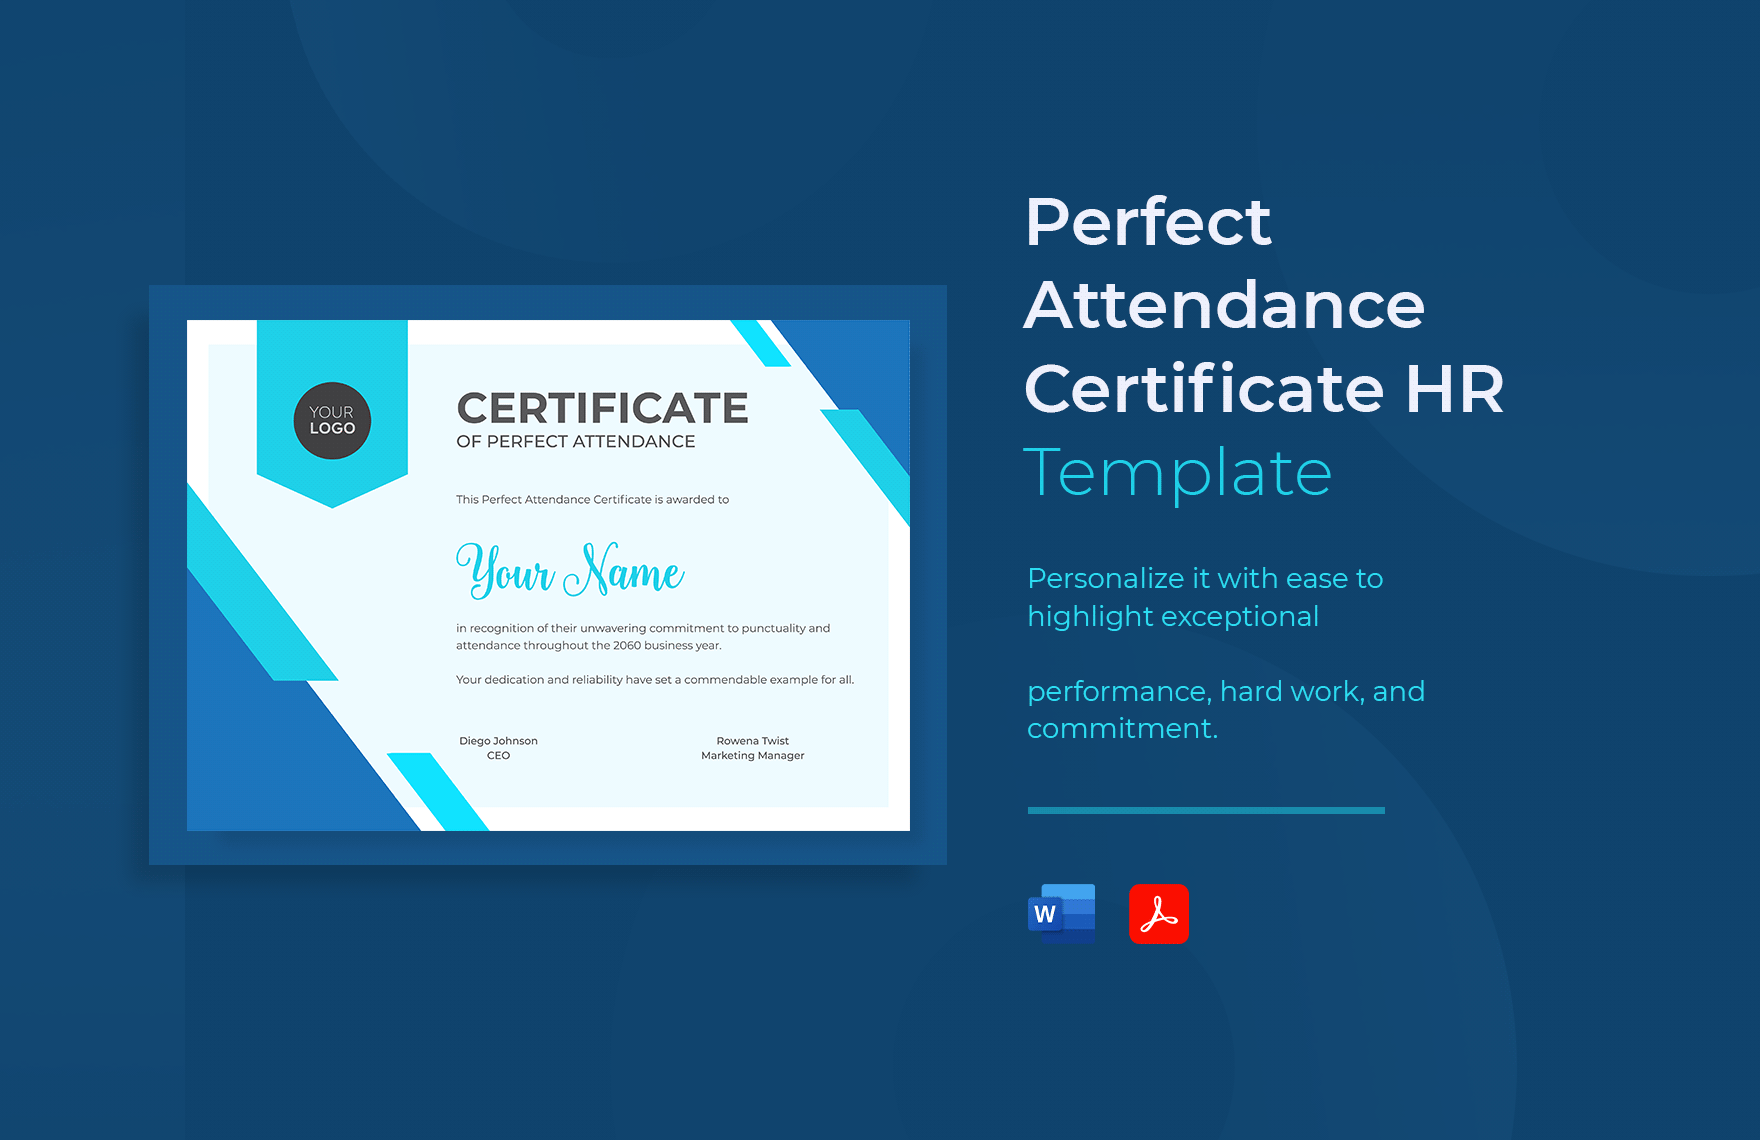 Perfect Attendance Certificate HR Template